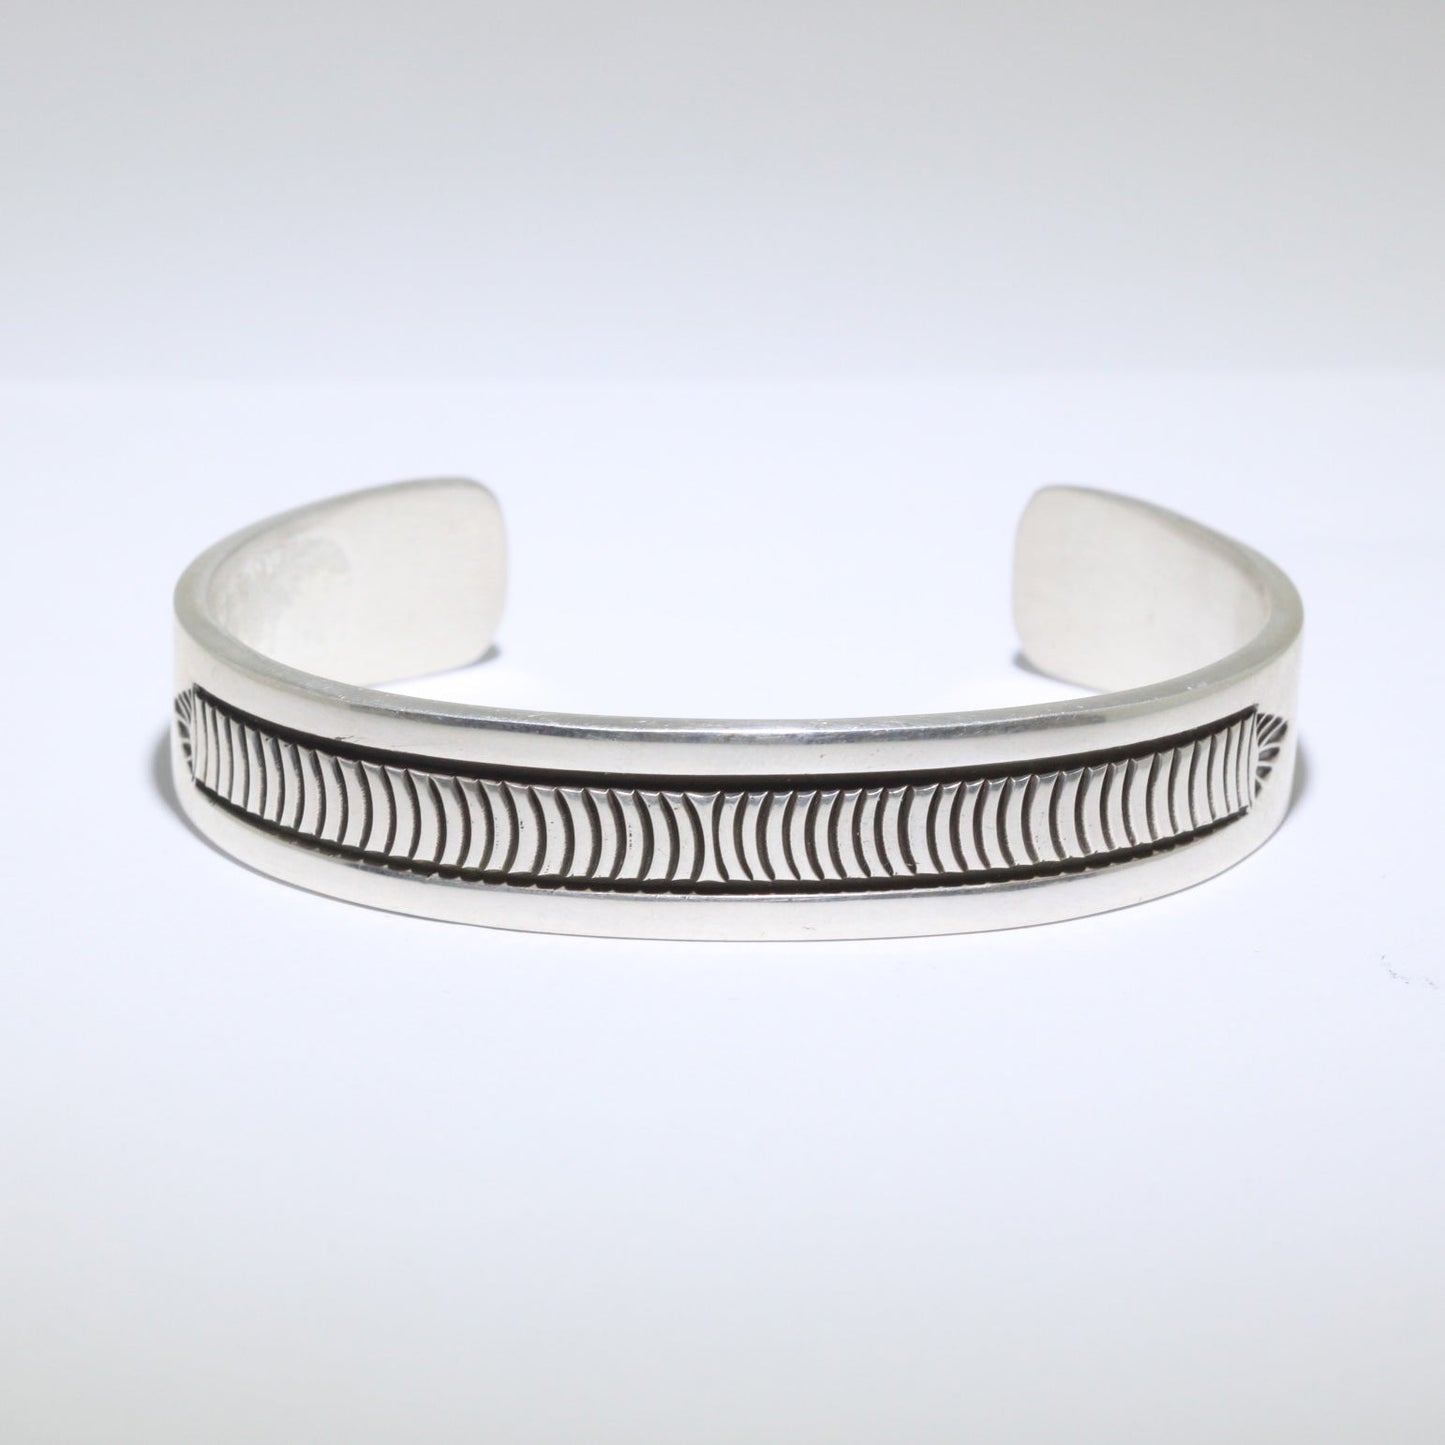 Silver bracelet by Bruce Morgan